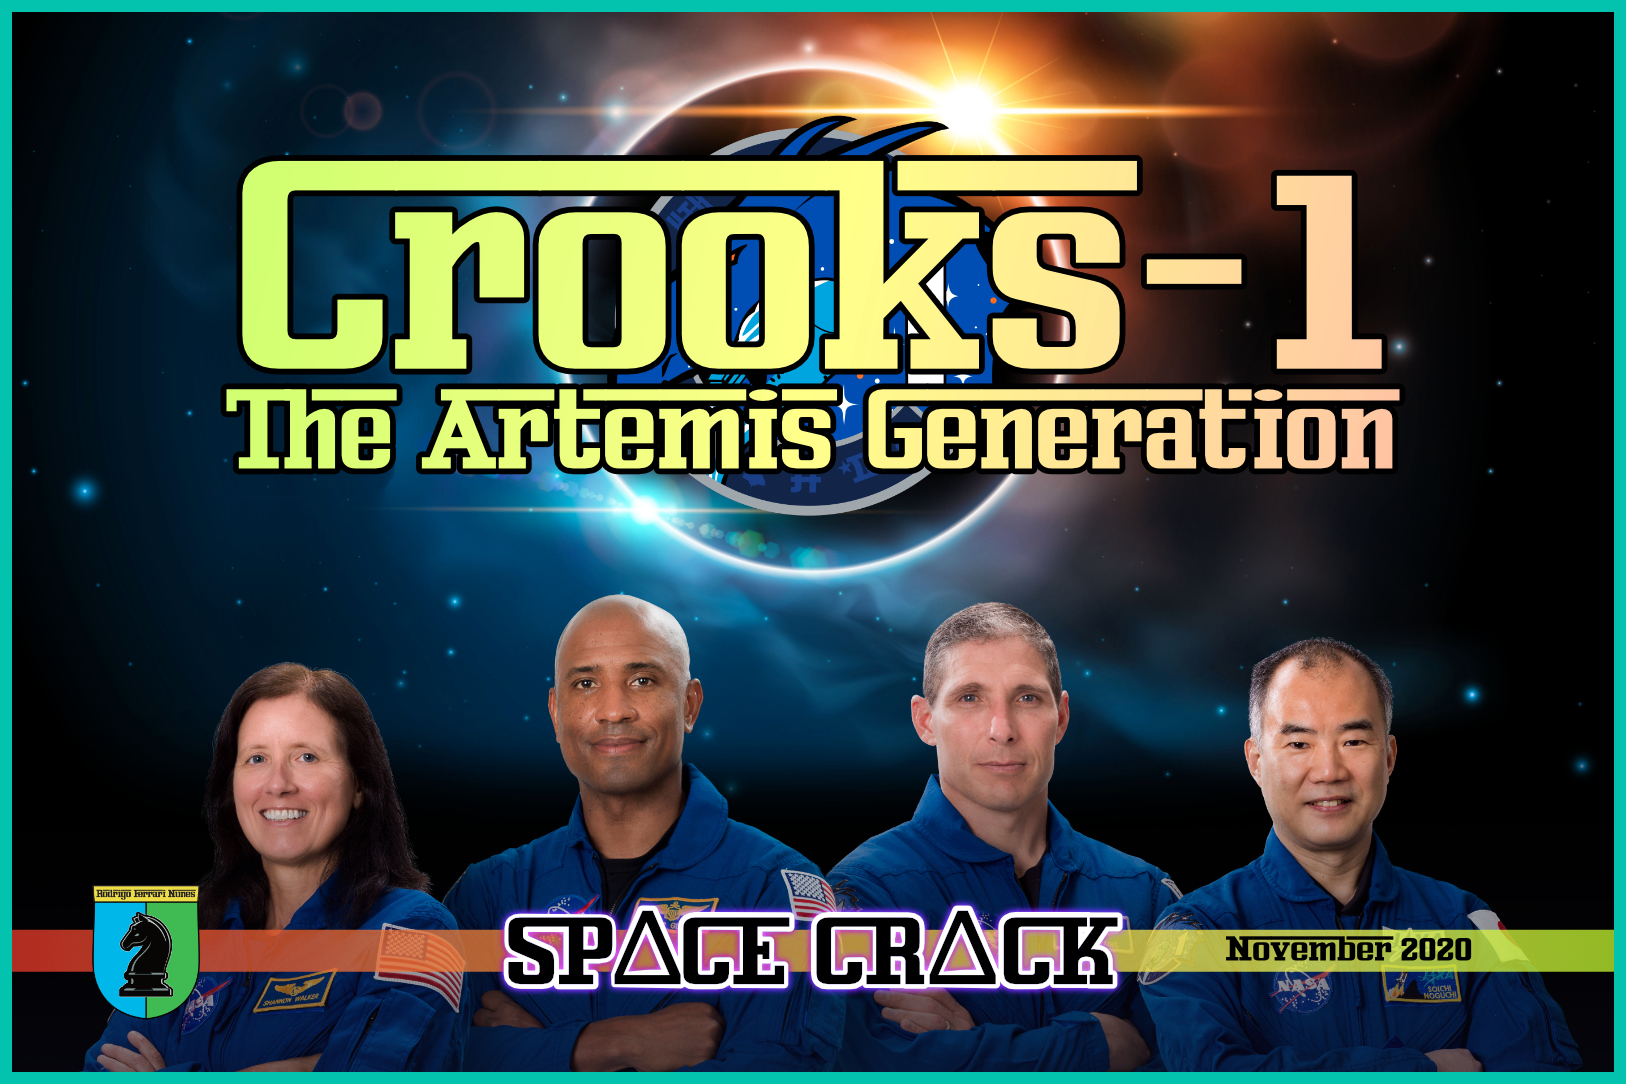 CROOKS-1: THE ARTEMIS GENERATION